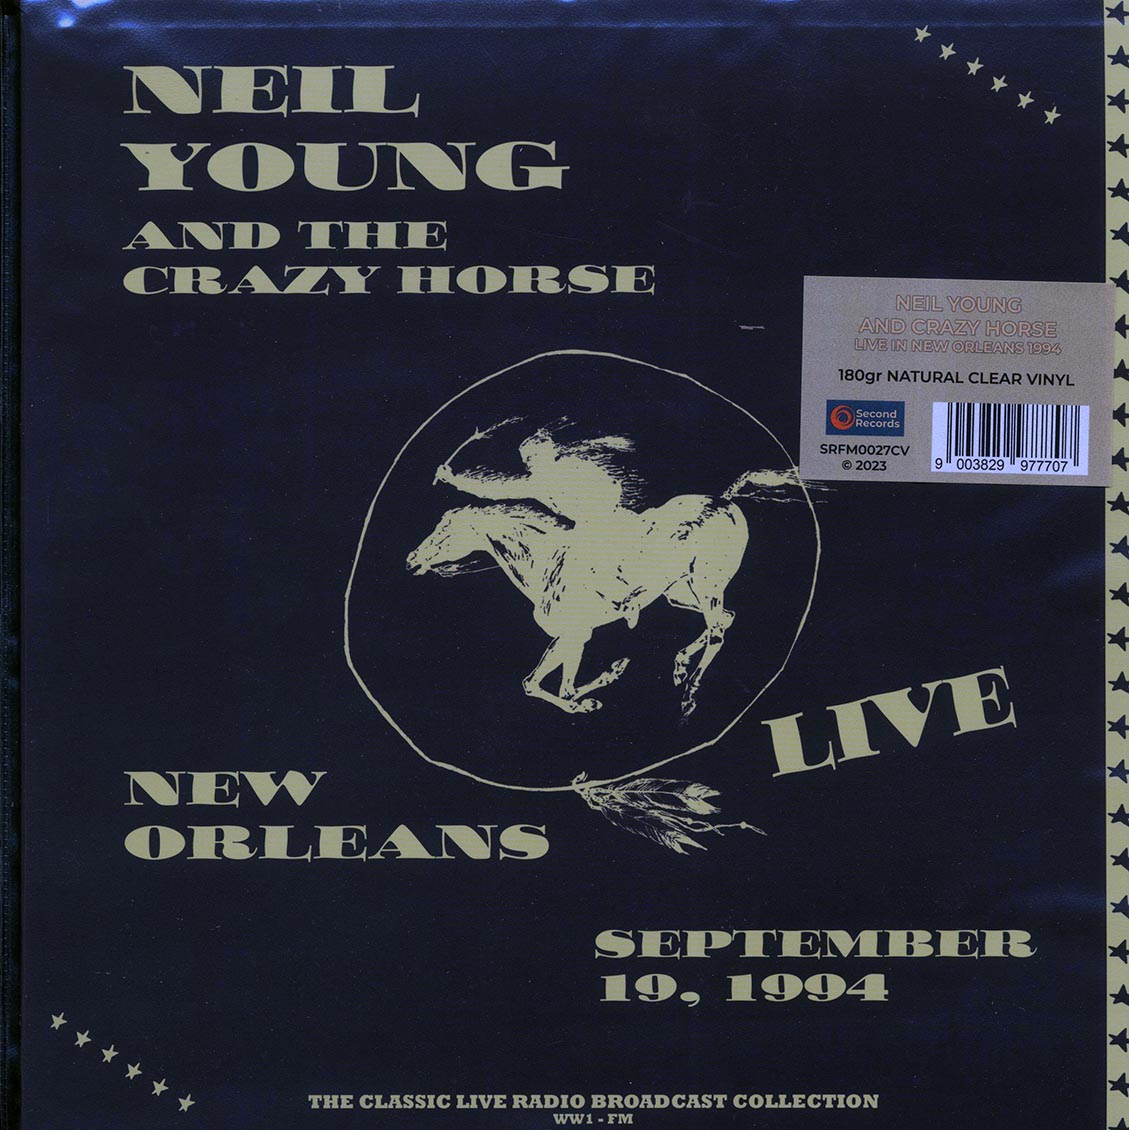 Neil Young & Crazy Horse - Live New Orleans September 19, 1994 (180g) (clear vinyl) - Vinyl LP